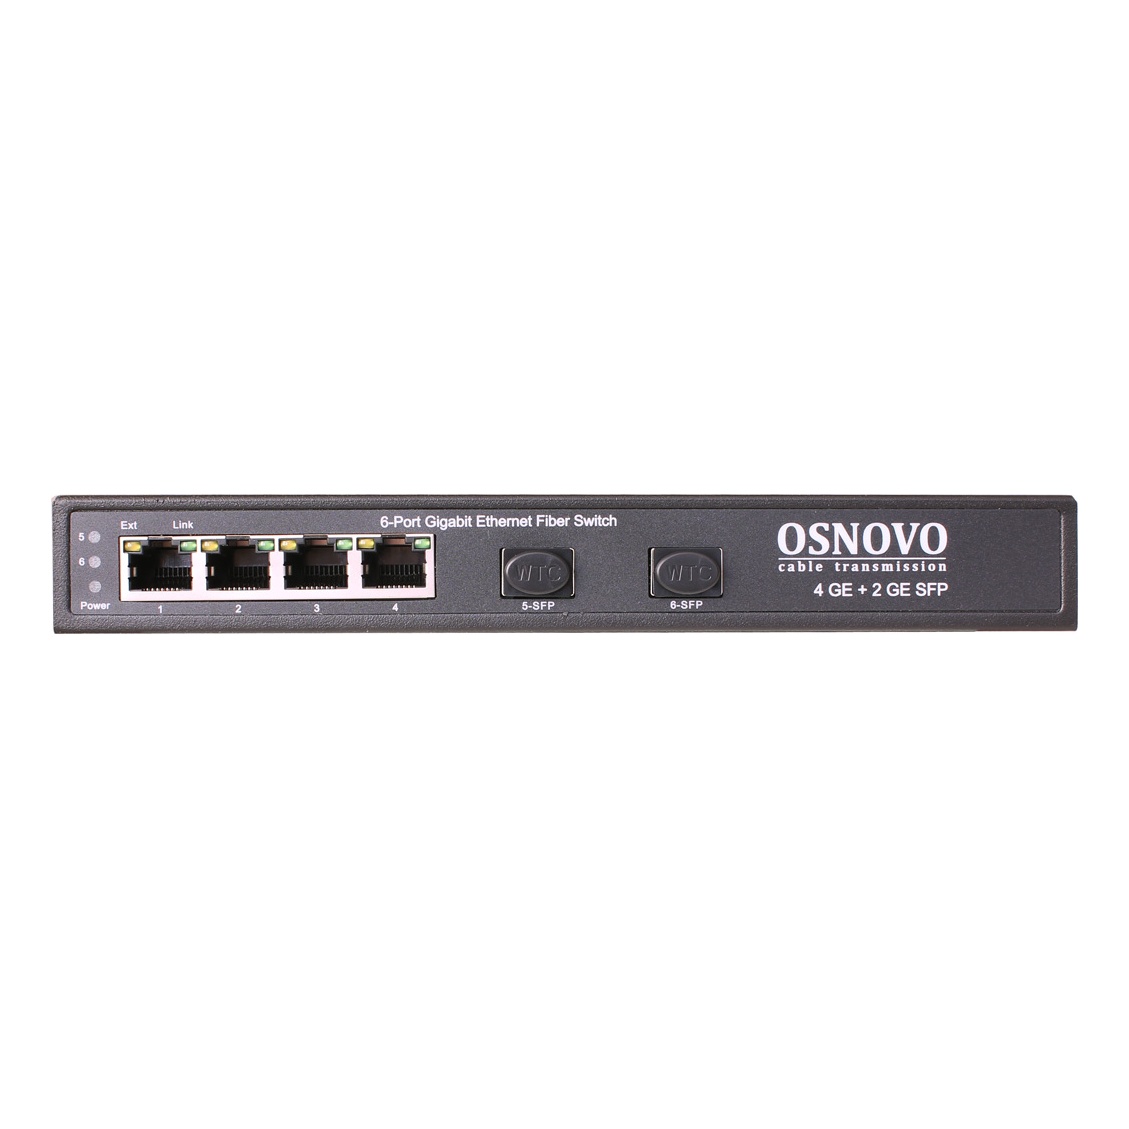 OSNOVO SW-7042 SW-7042 Коммутатор Gigabit Ethernet на 4 RJ45 + 2 SFP